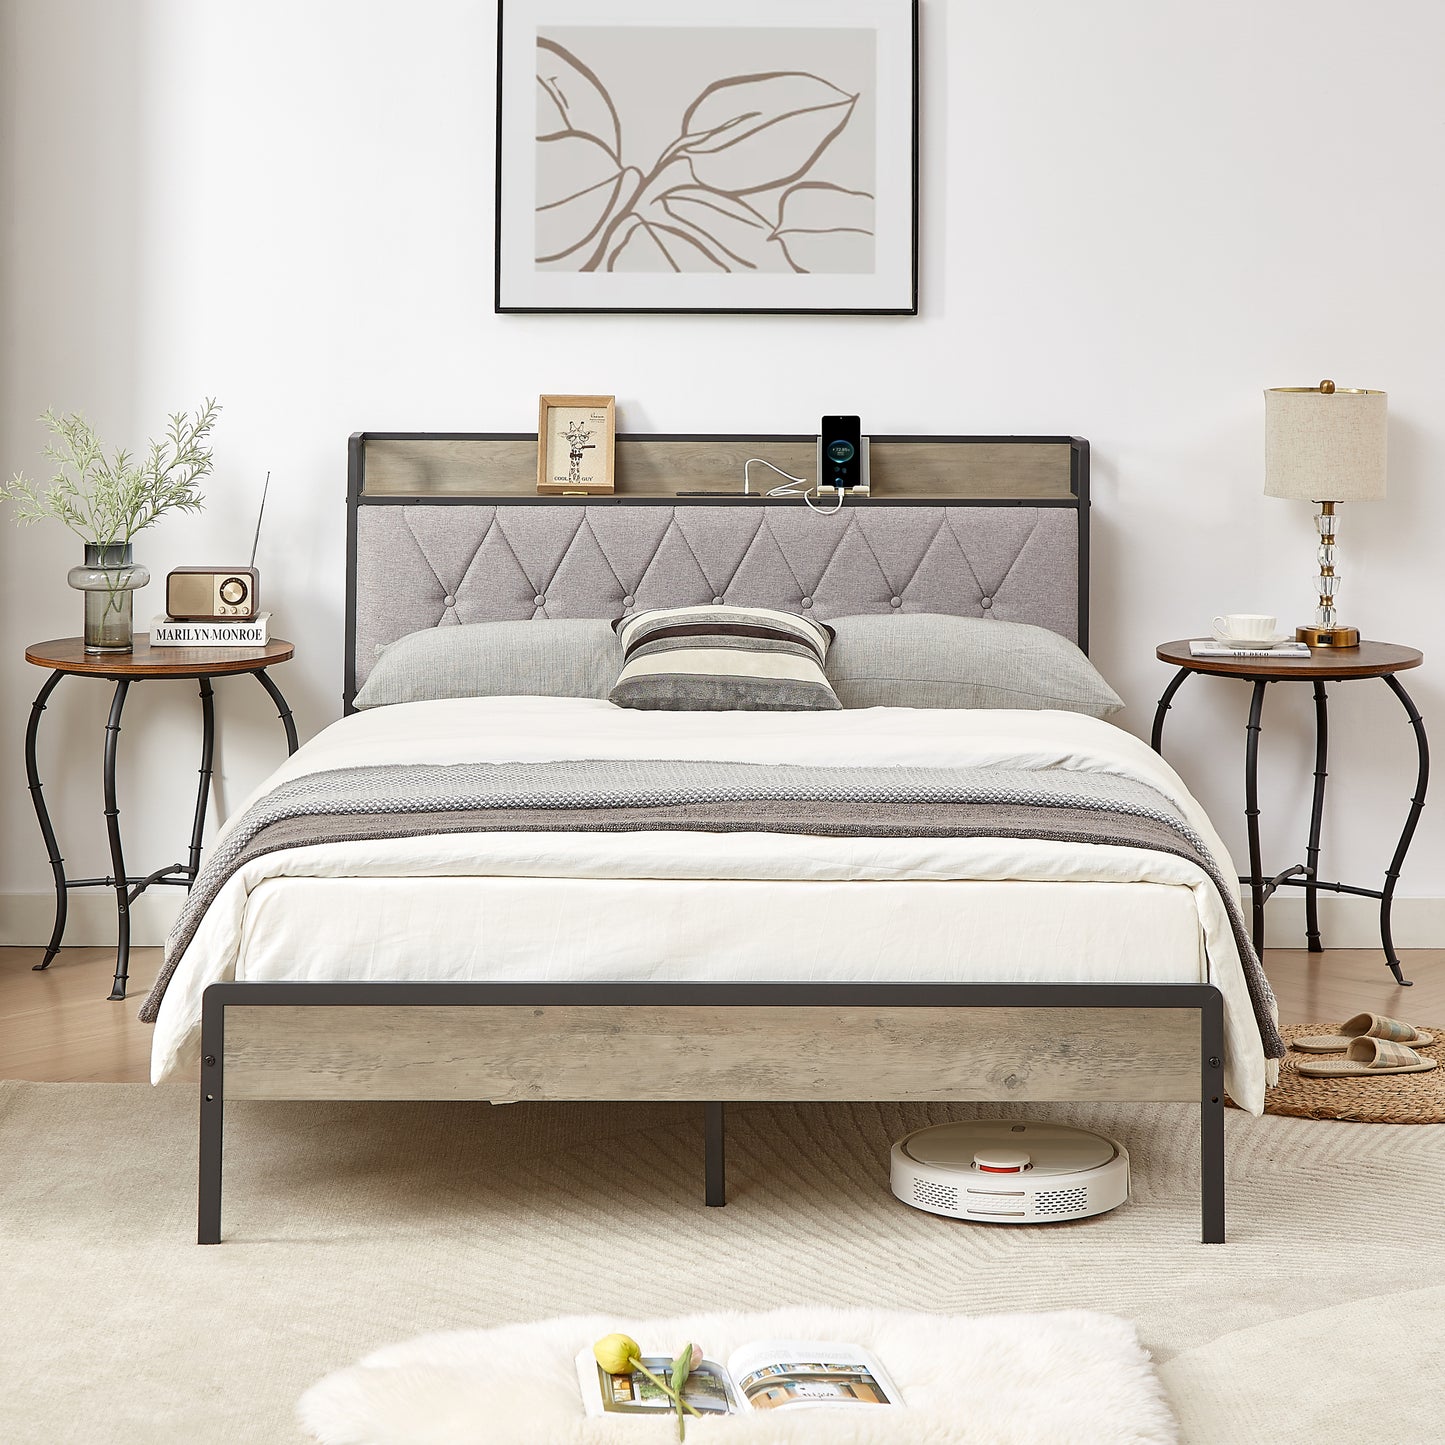 Parker Full Size Bed Frame (gray)